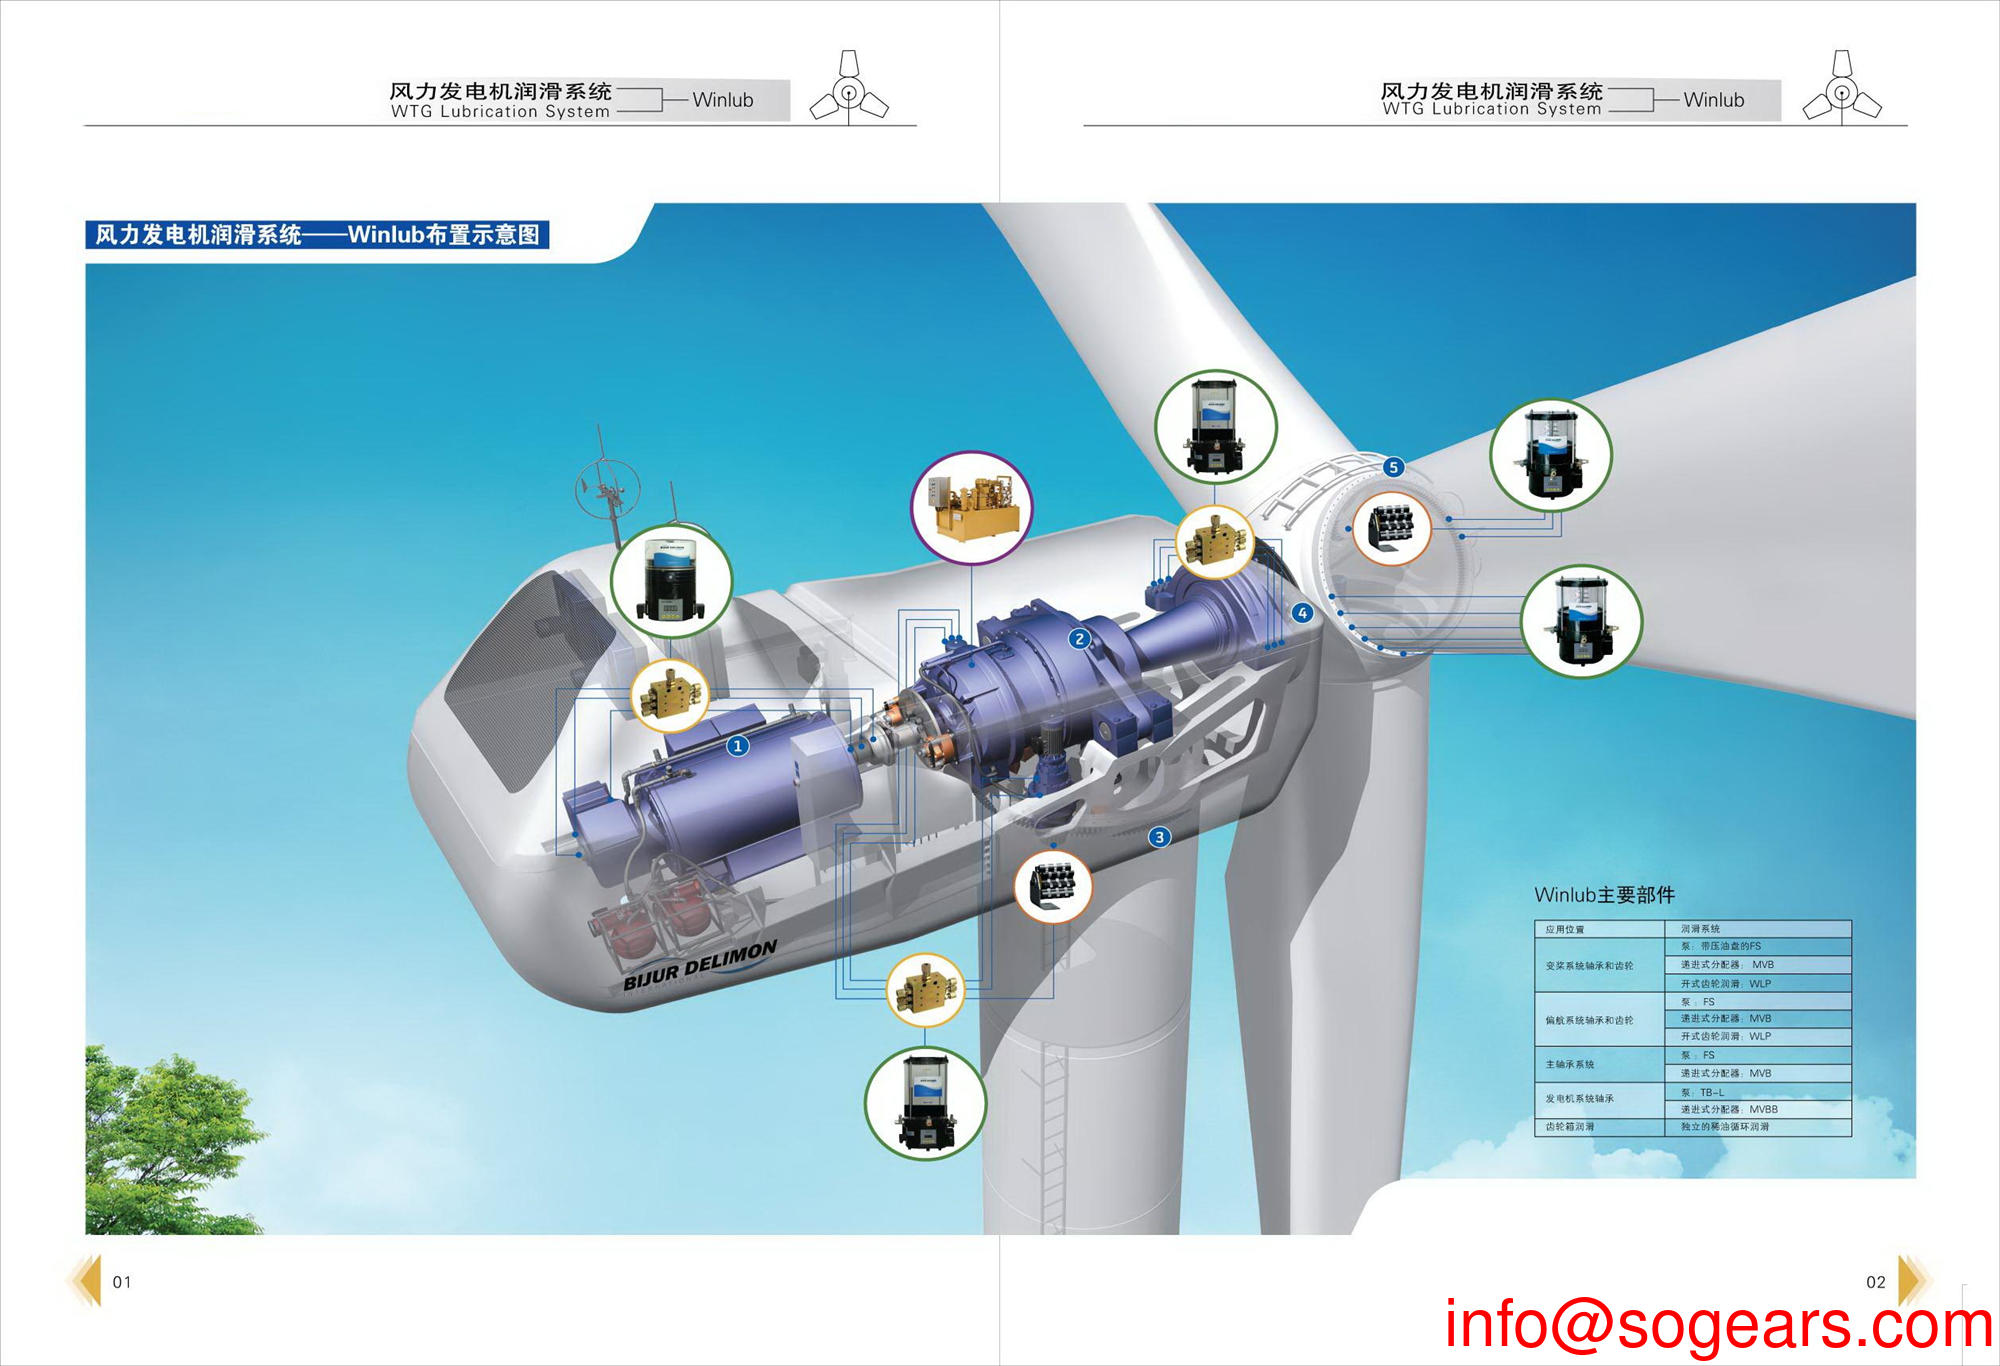 Wind turbine gearbox manufacturers